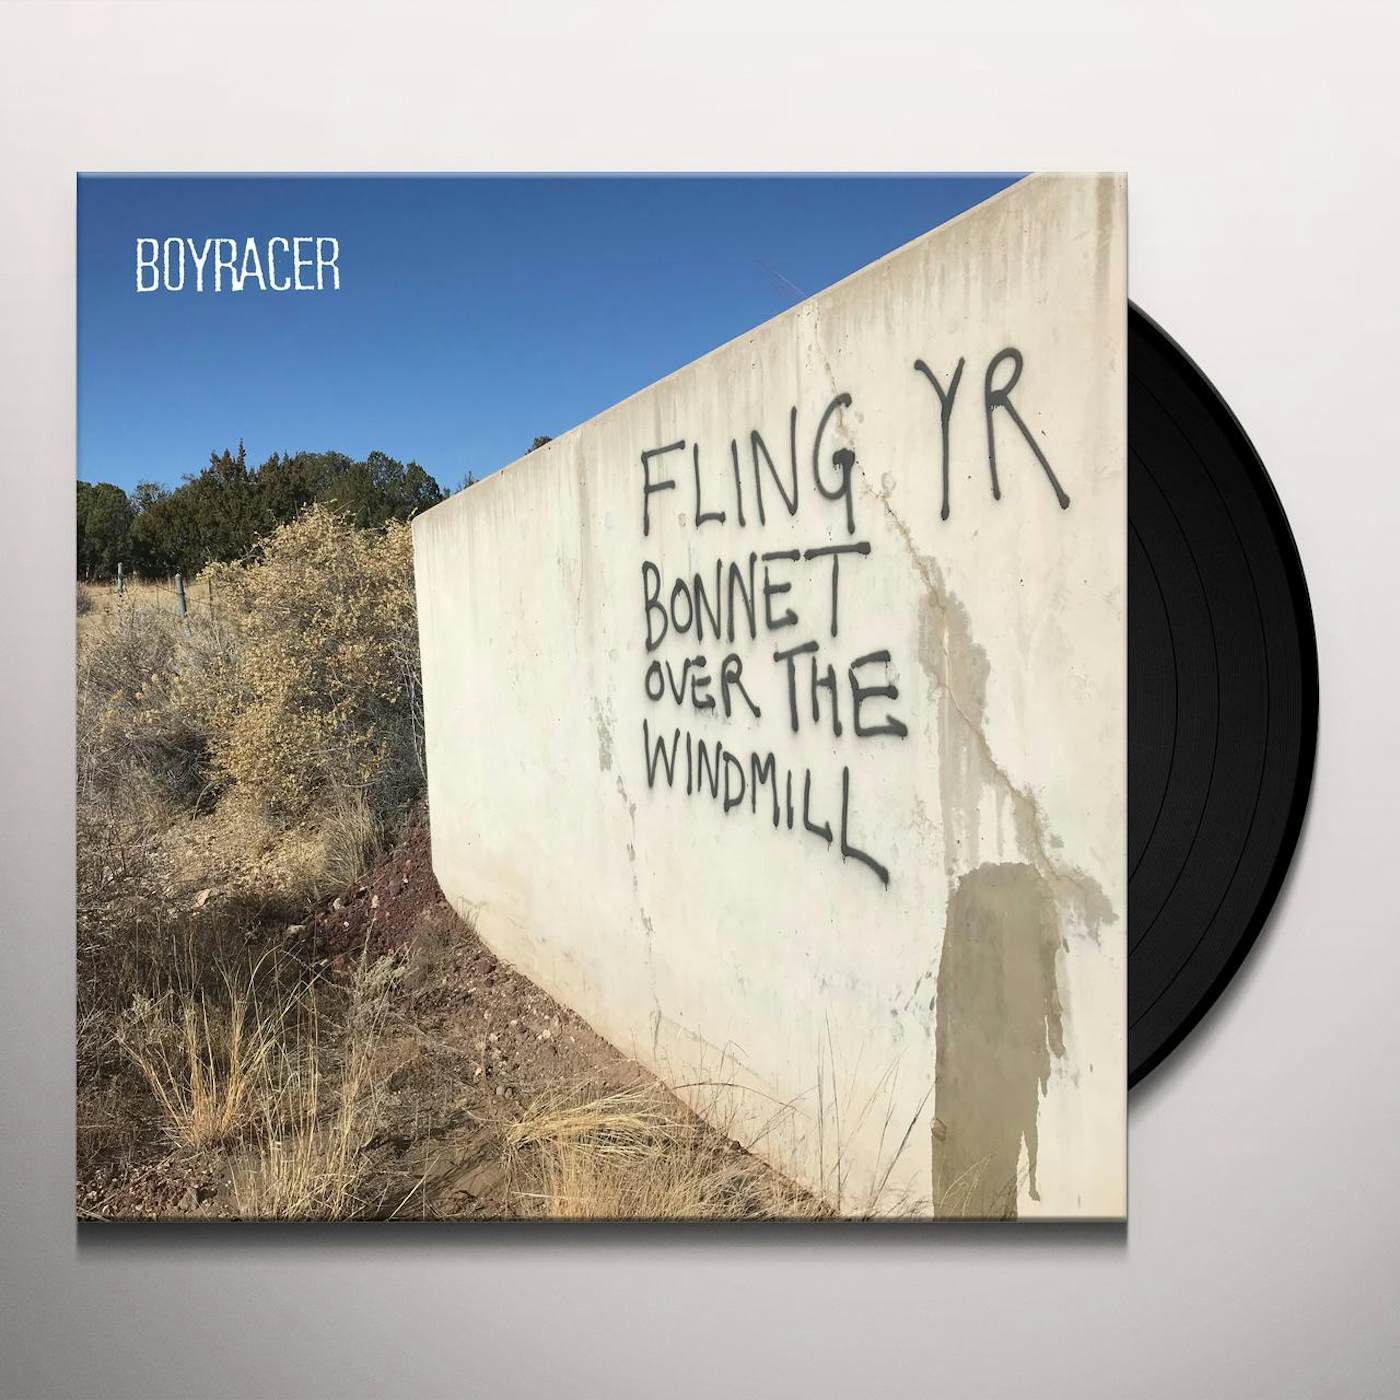 Boyracer Fling Yr Bonnet Over The Windmill Vinyl Record